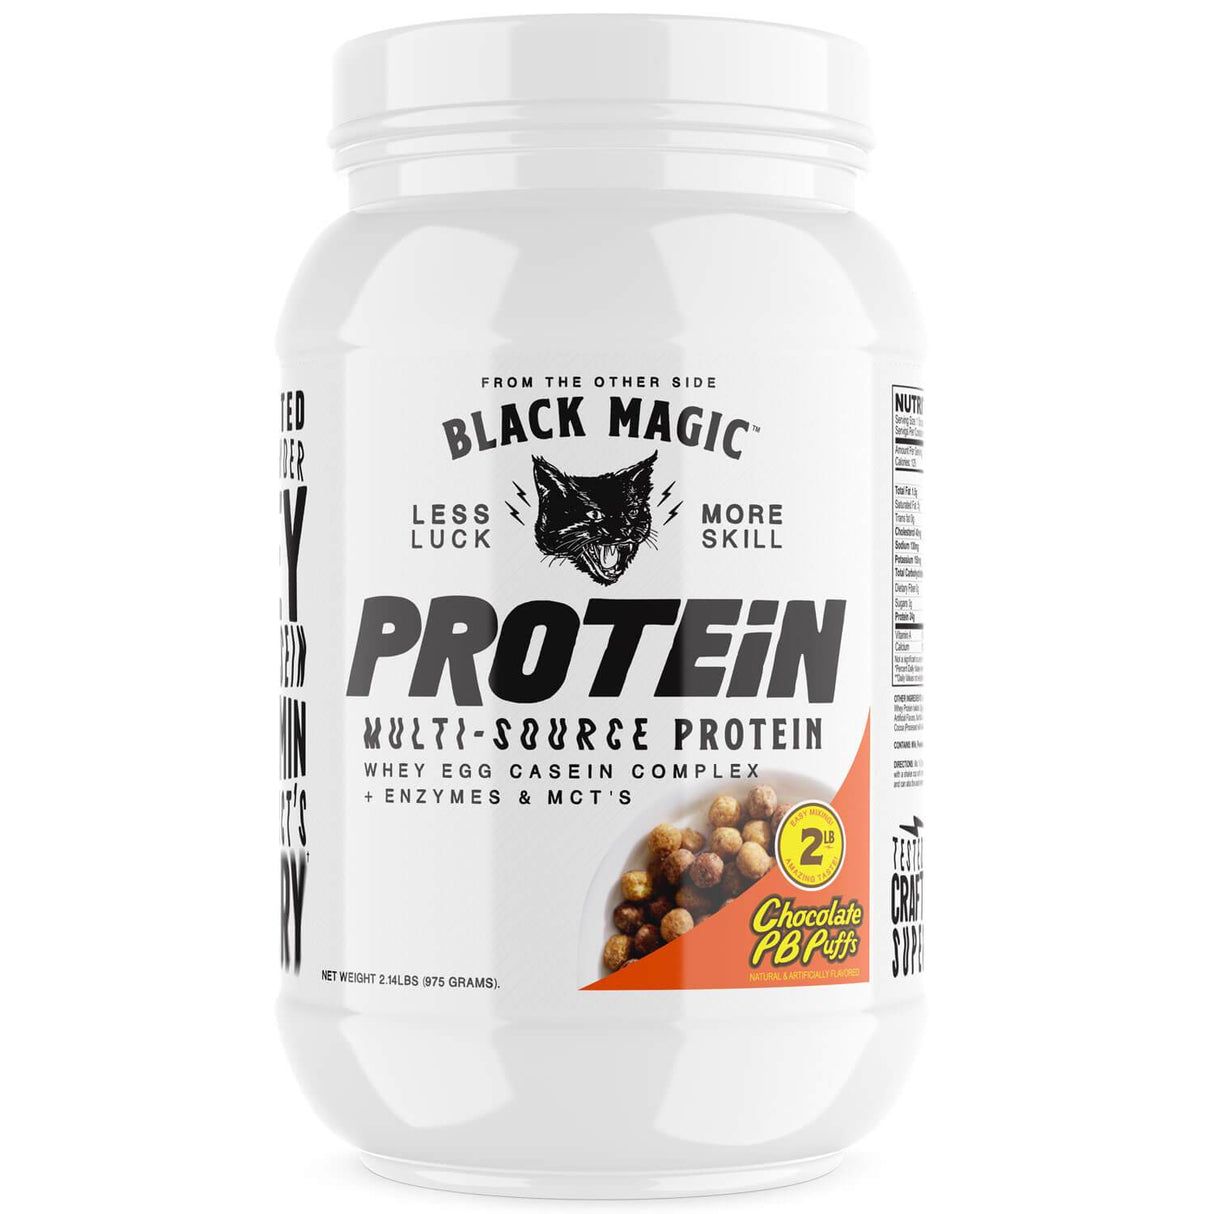 Black Magic Protein - Prime.Nutrition1